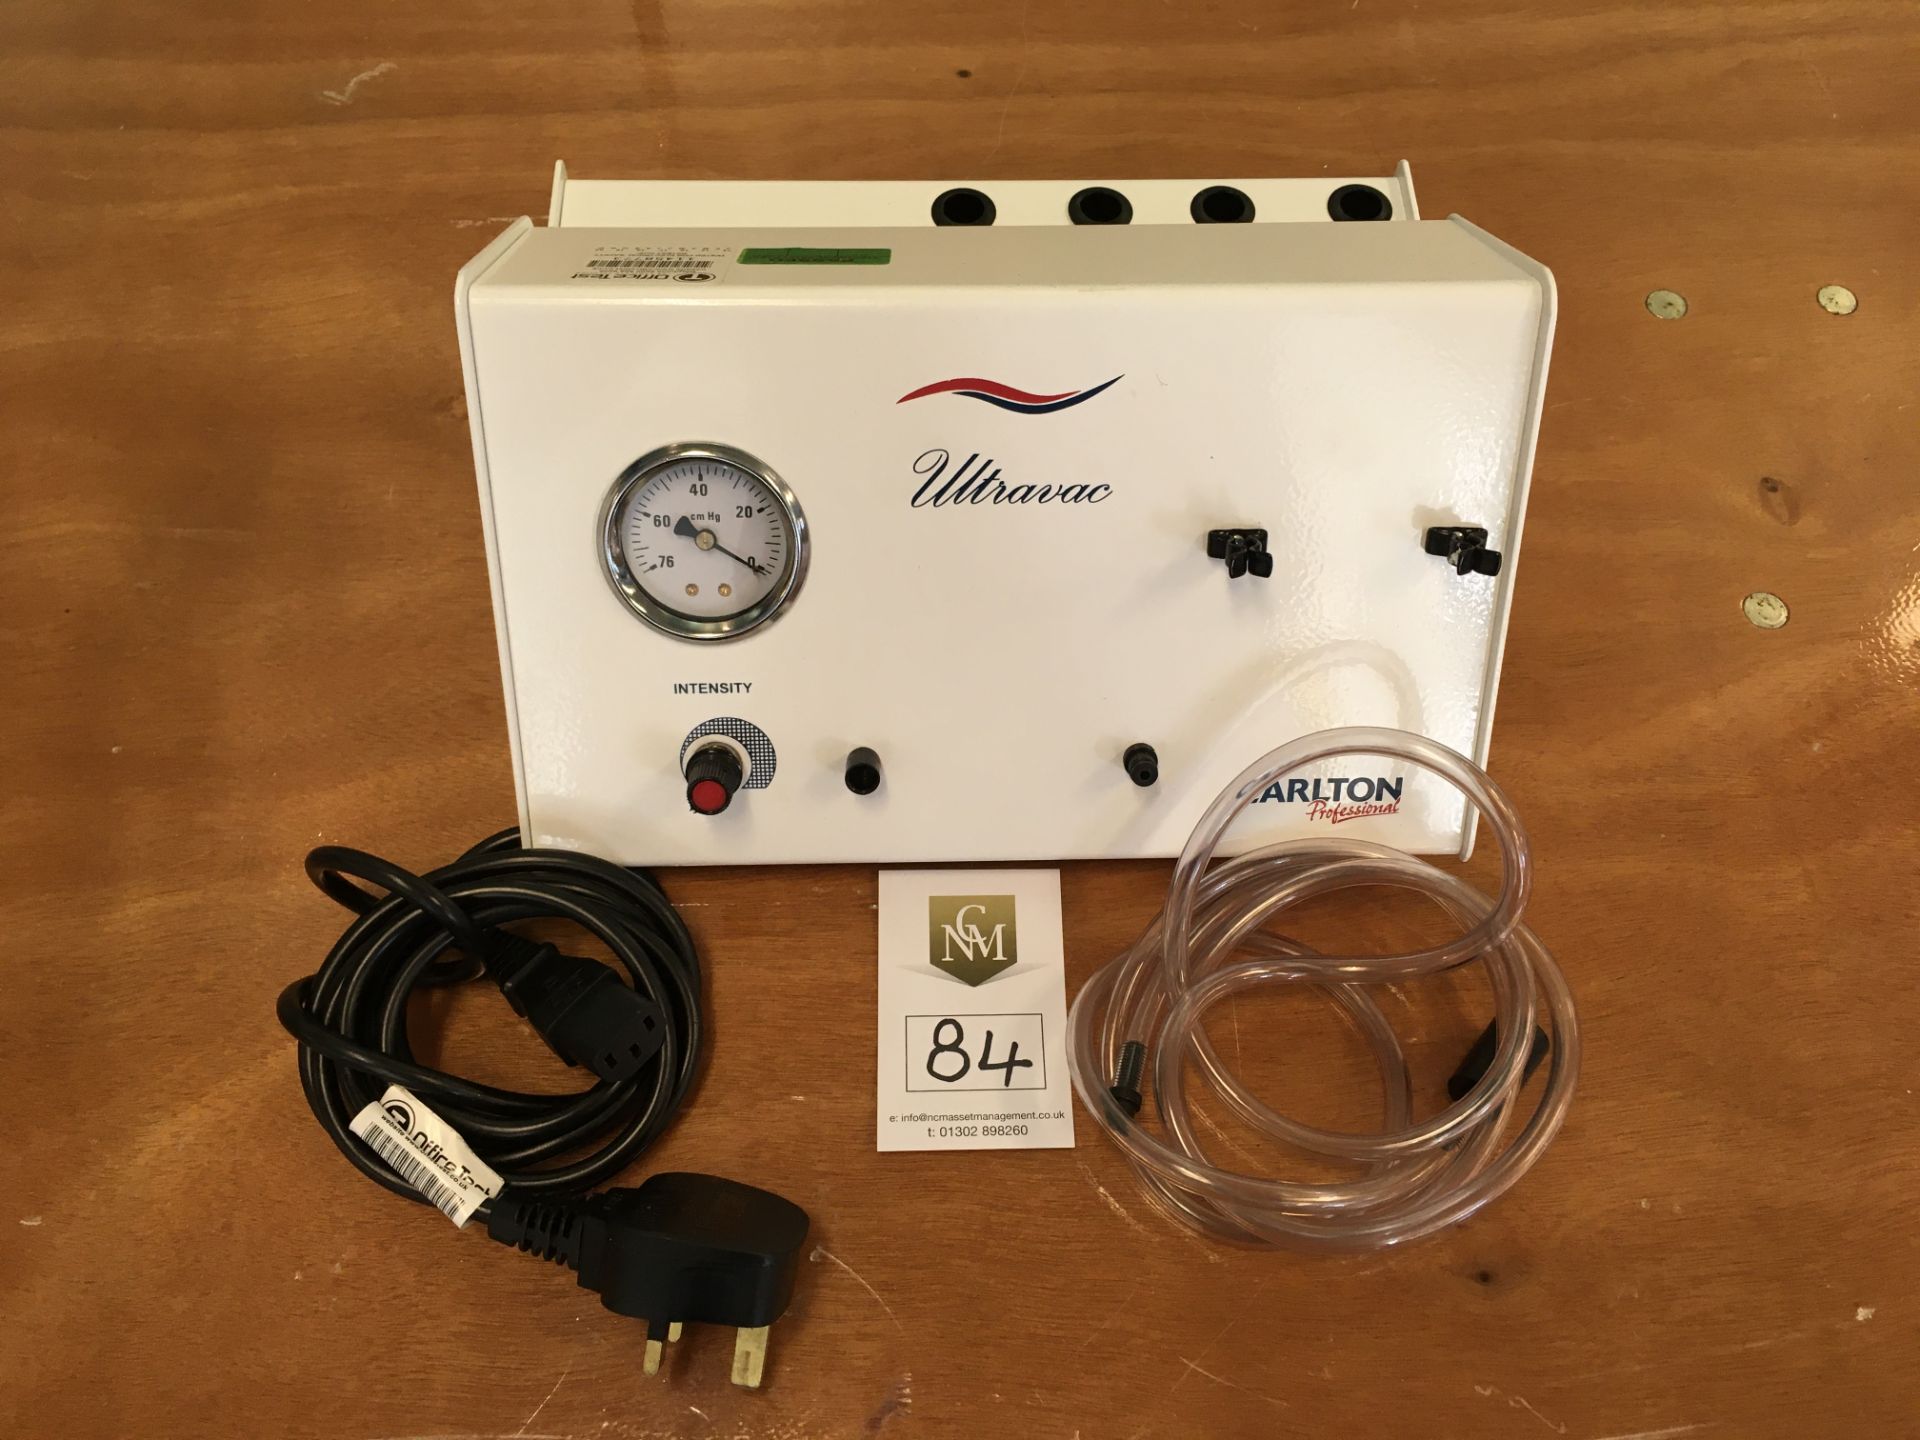 Carlton Professional Ultravac Vacuum Therapy Unit